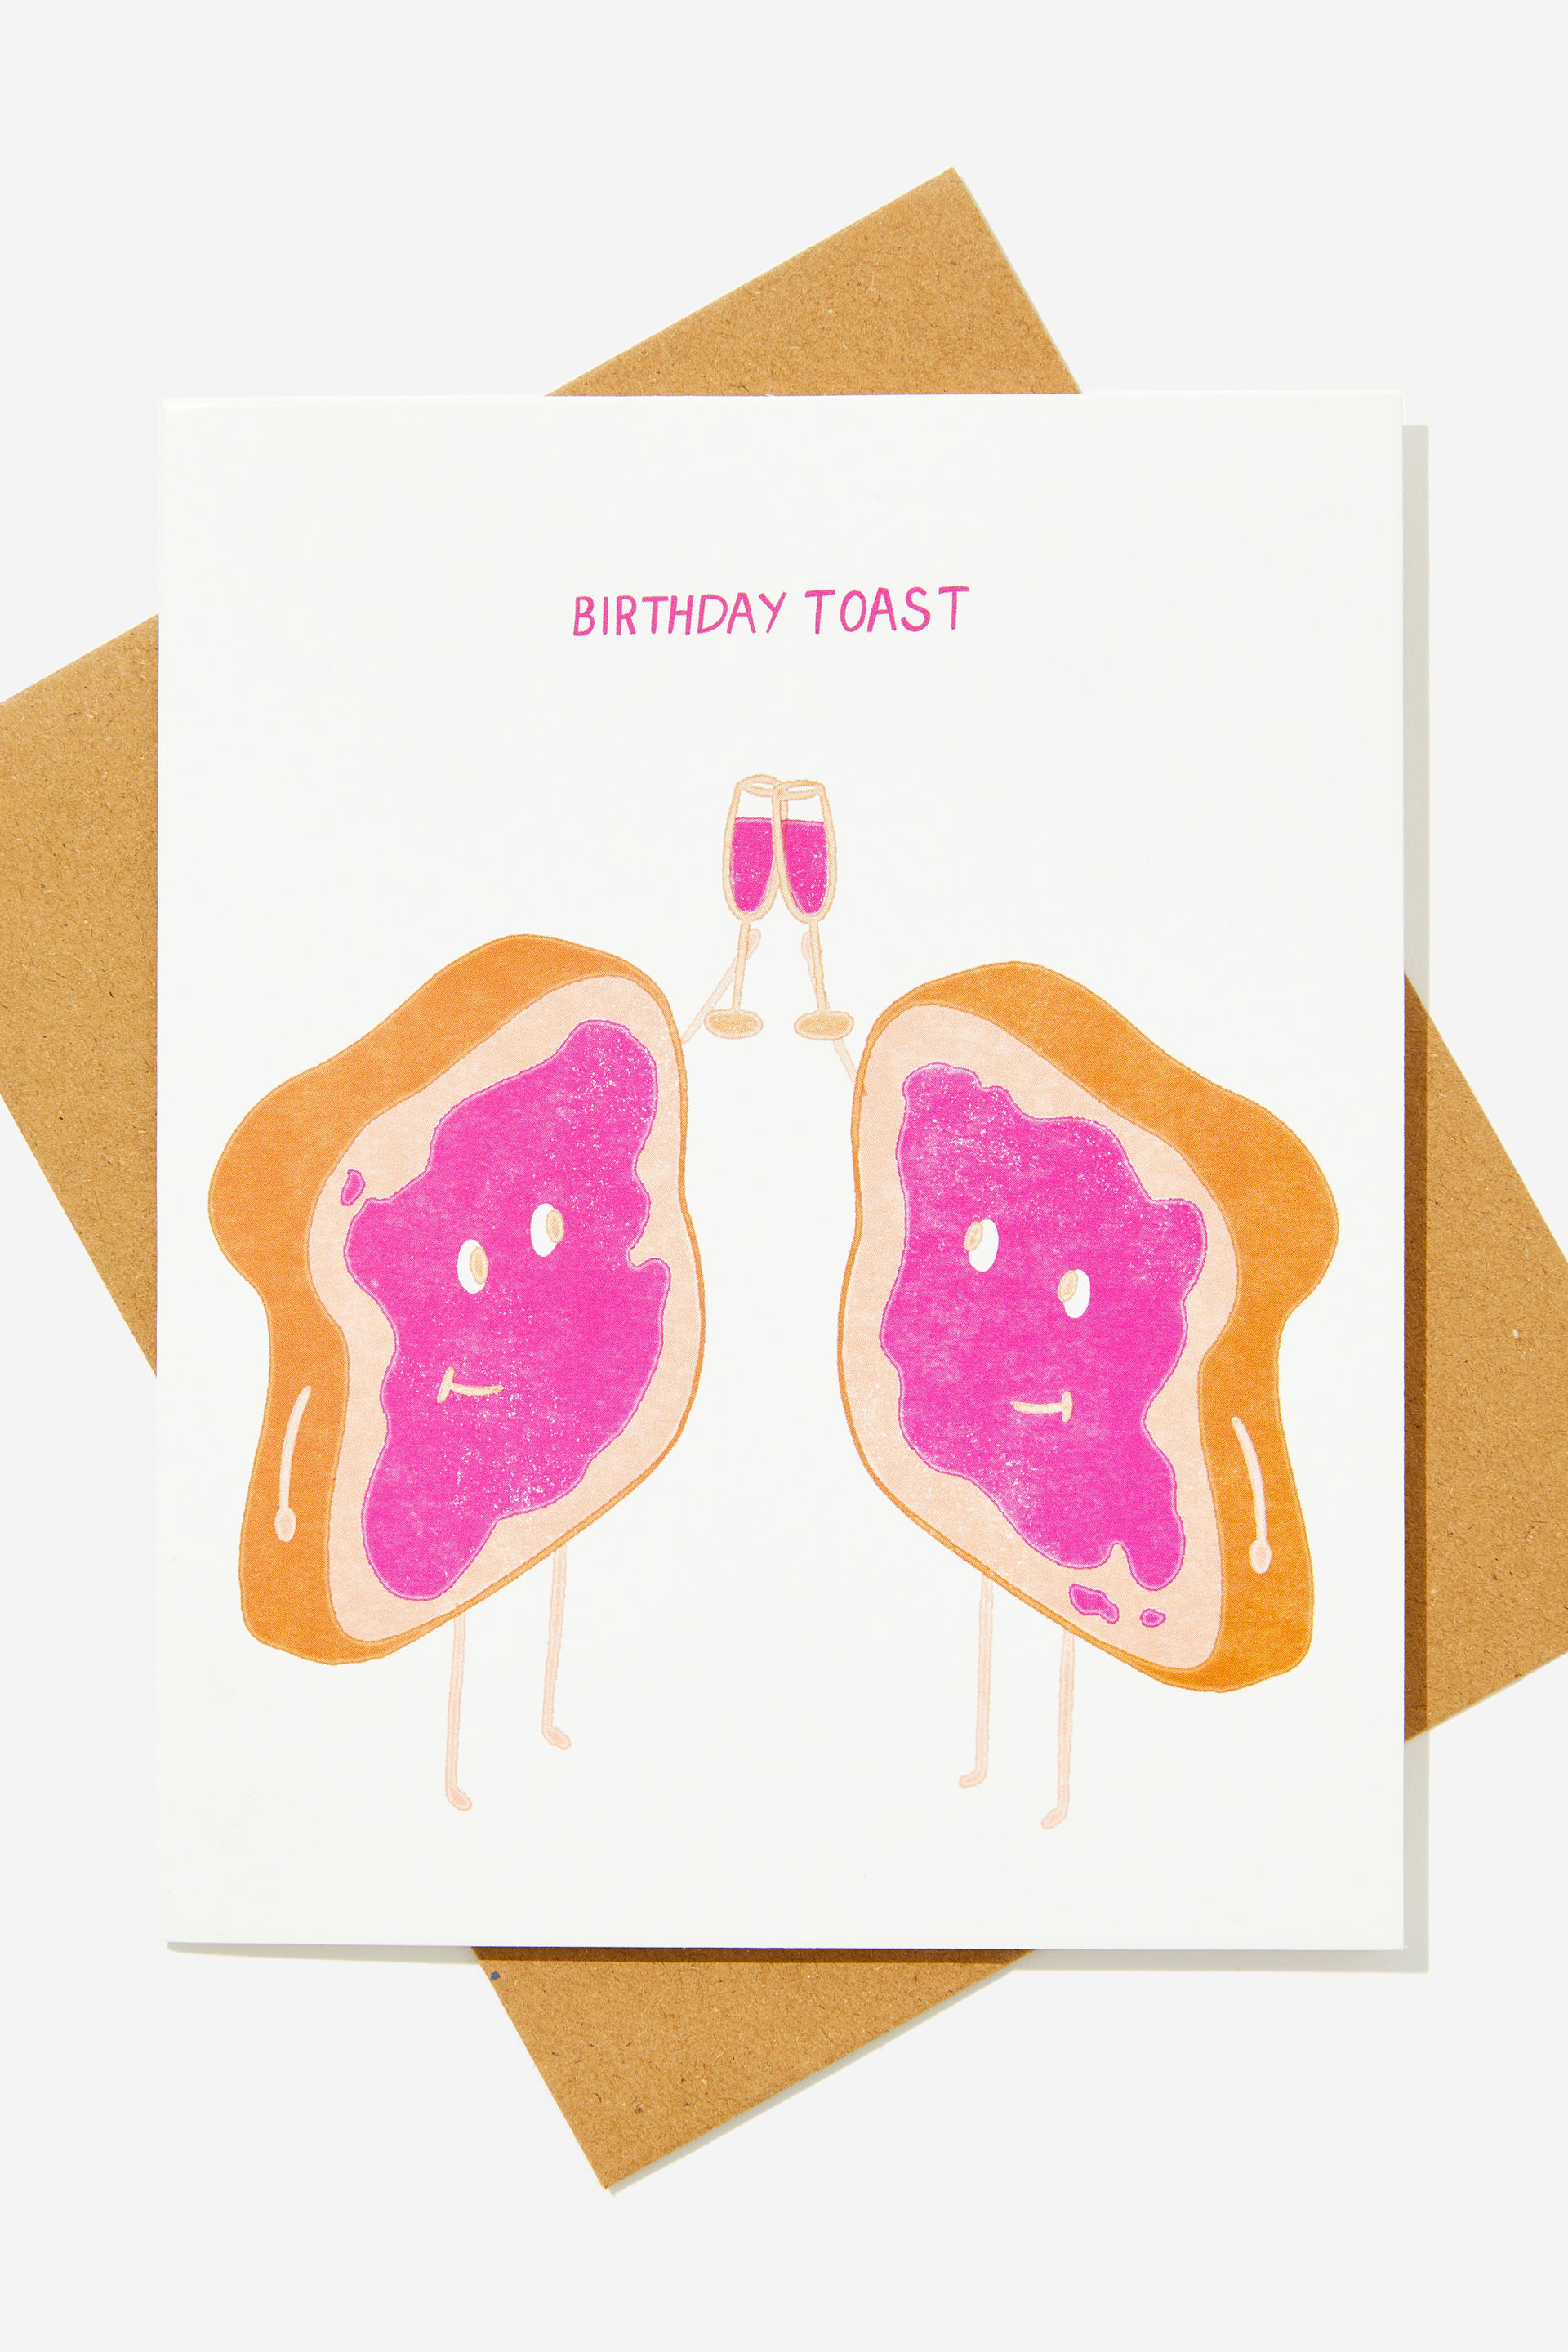 Typo - Nice Birthday Card - Birthday toast